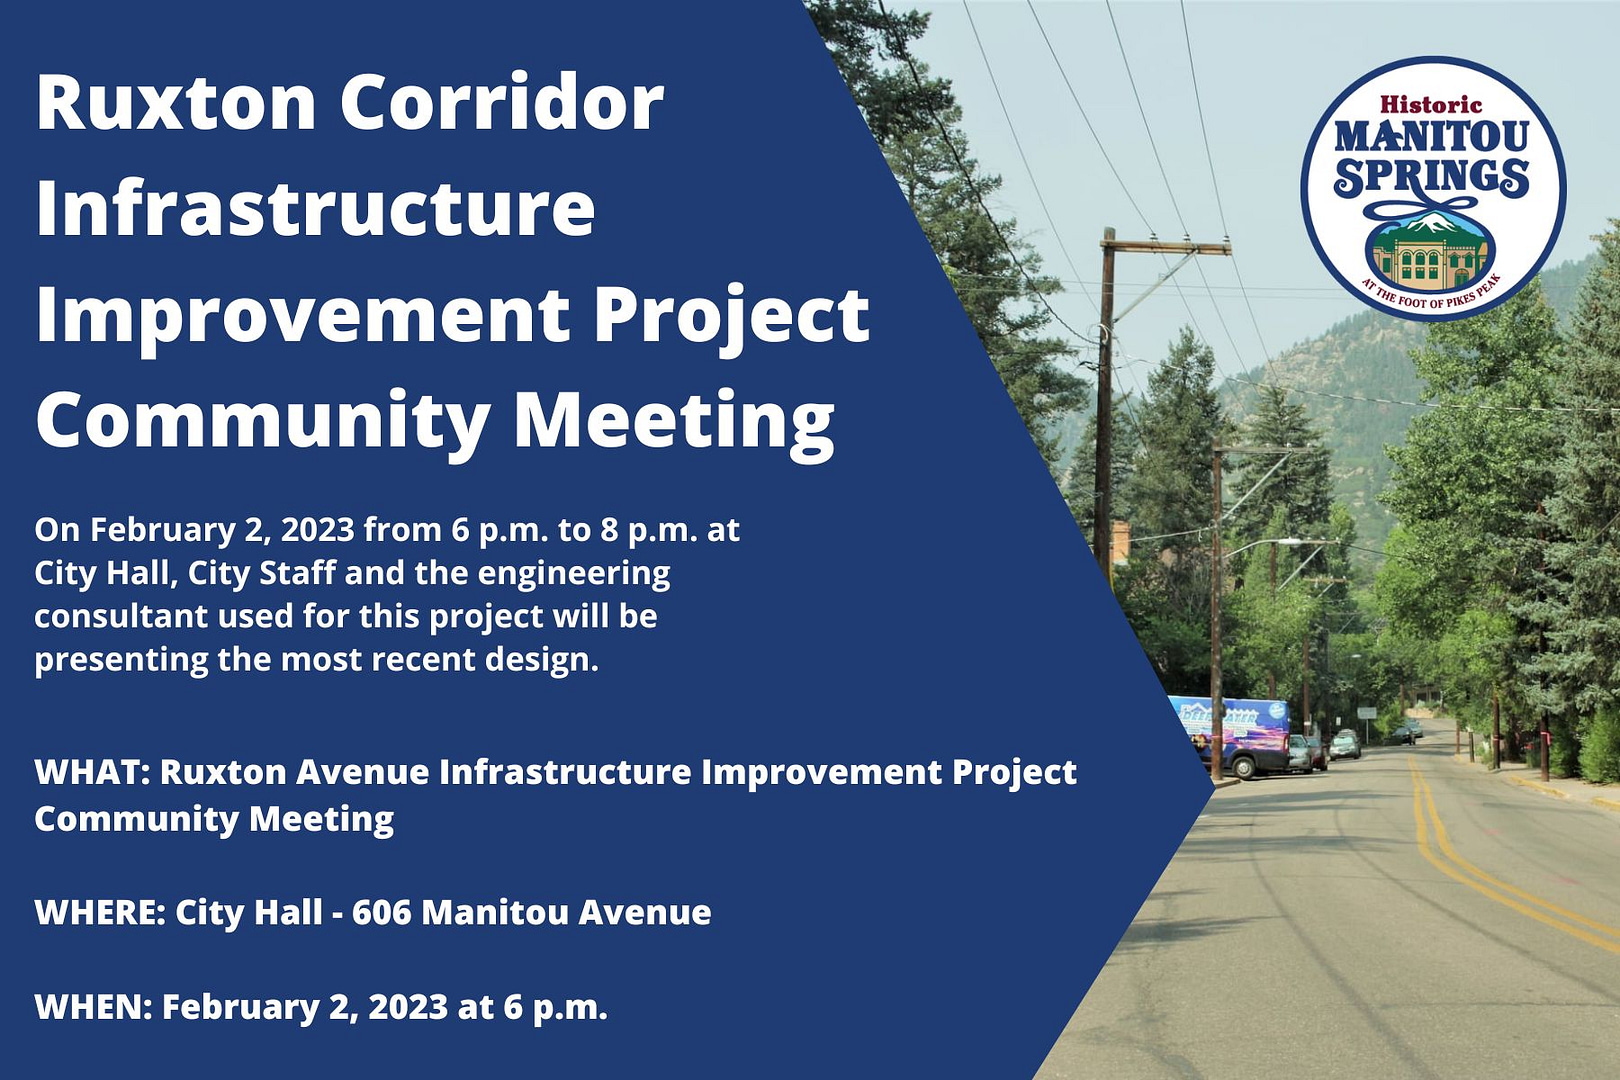 Ruxton Corridor Infrastructure Improvement Project Community Meeting